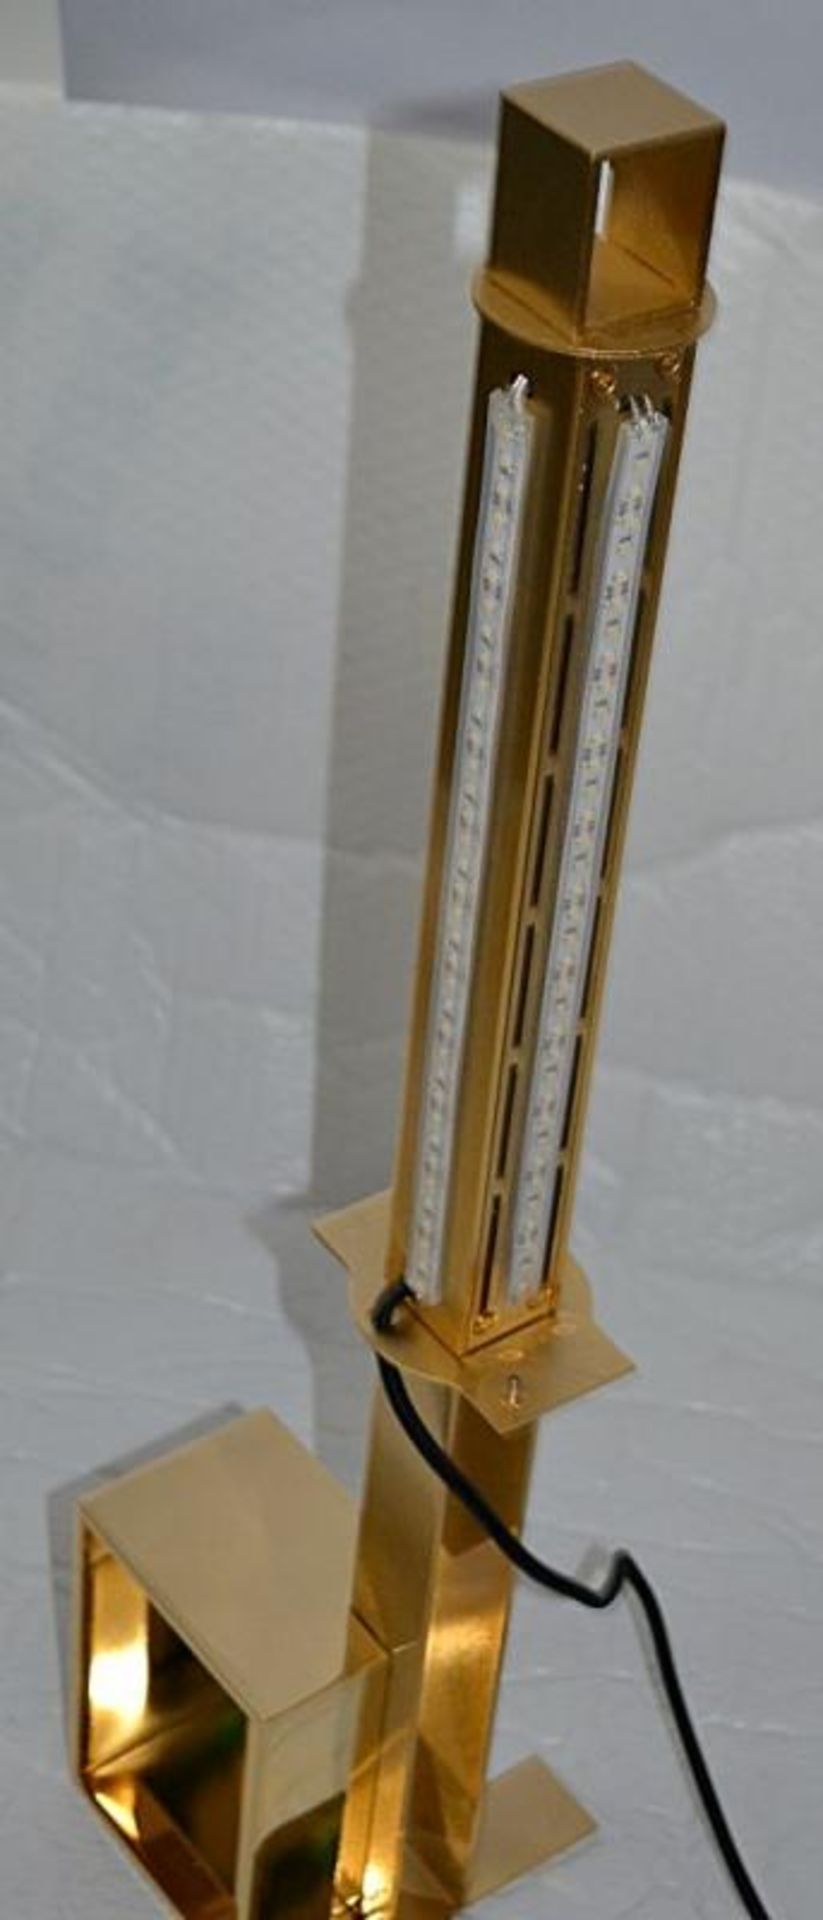 1 x FENDI CASA Chiara Bedside Lamp in Gold - Dimensions: H74 x W16 x D16cm - Ref: 4822331B - CL087 - - Image 6 of 14